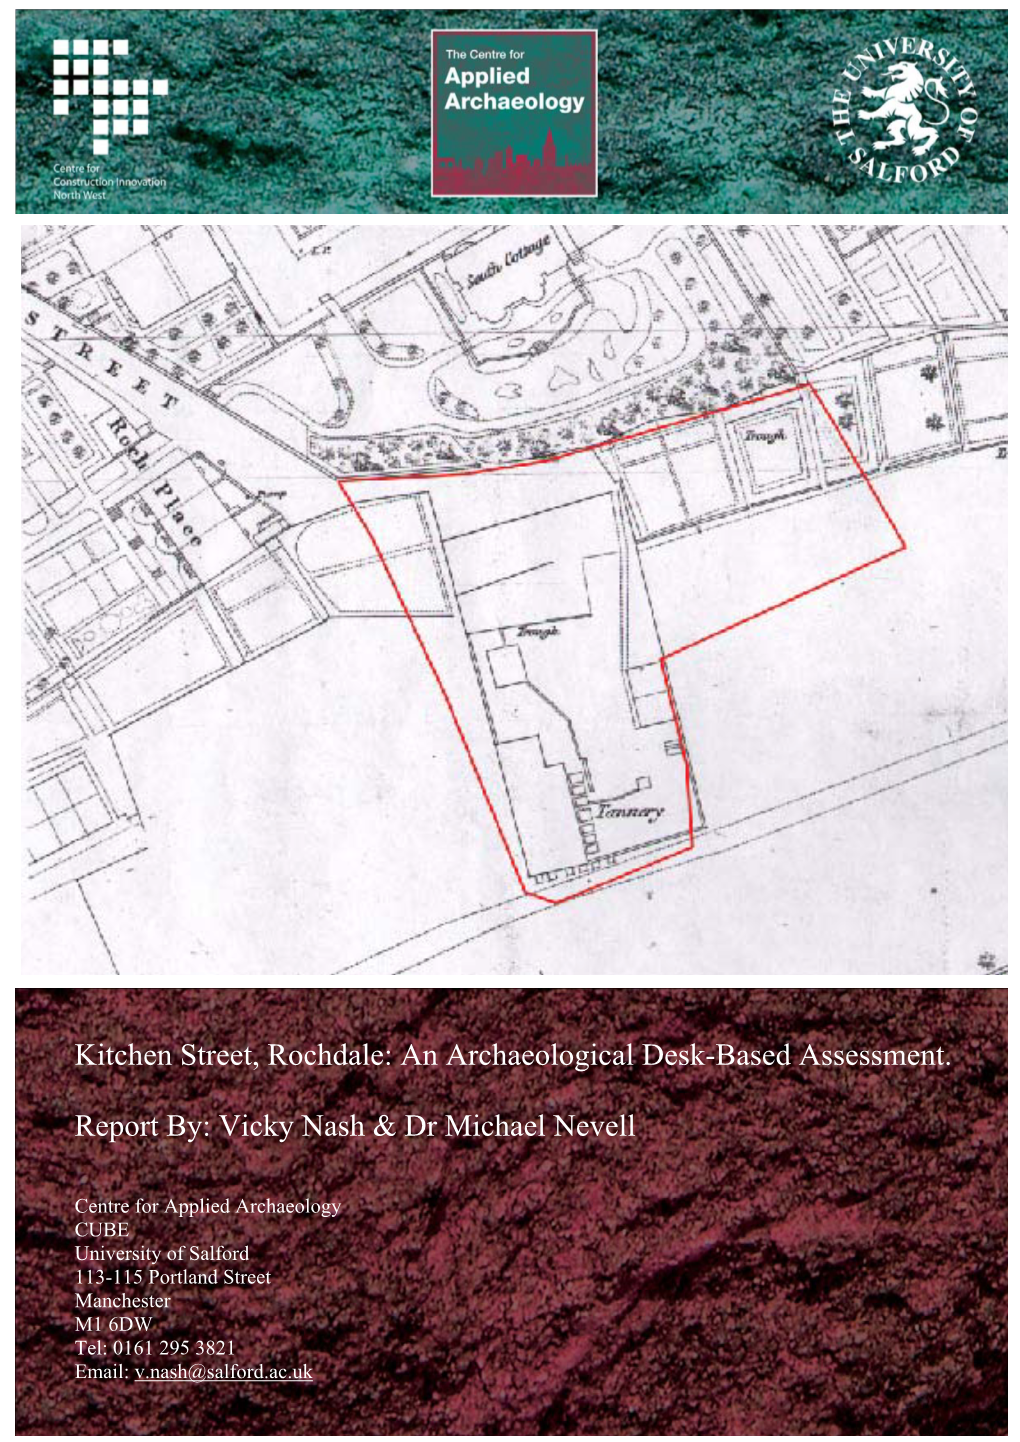 Kitchen Street, Rochdale: an Archaeological Desk-Based Assessment